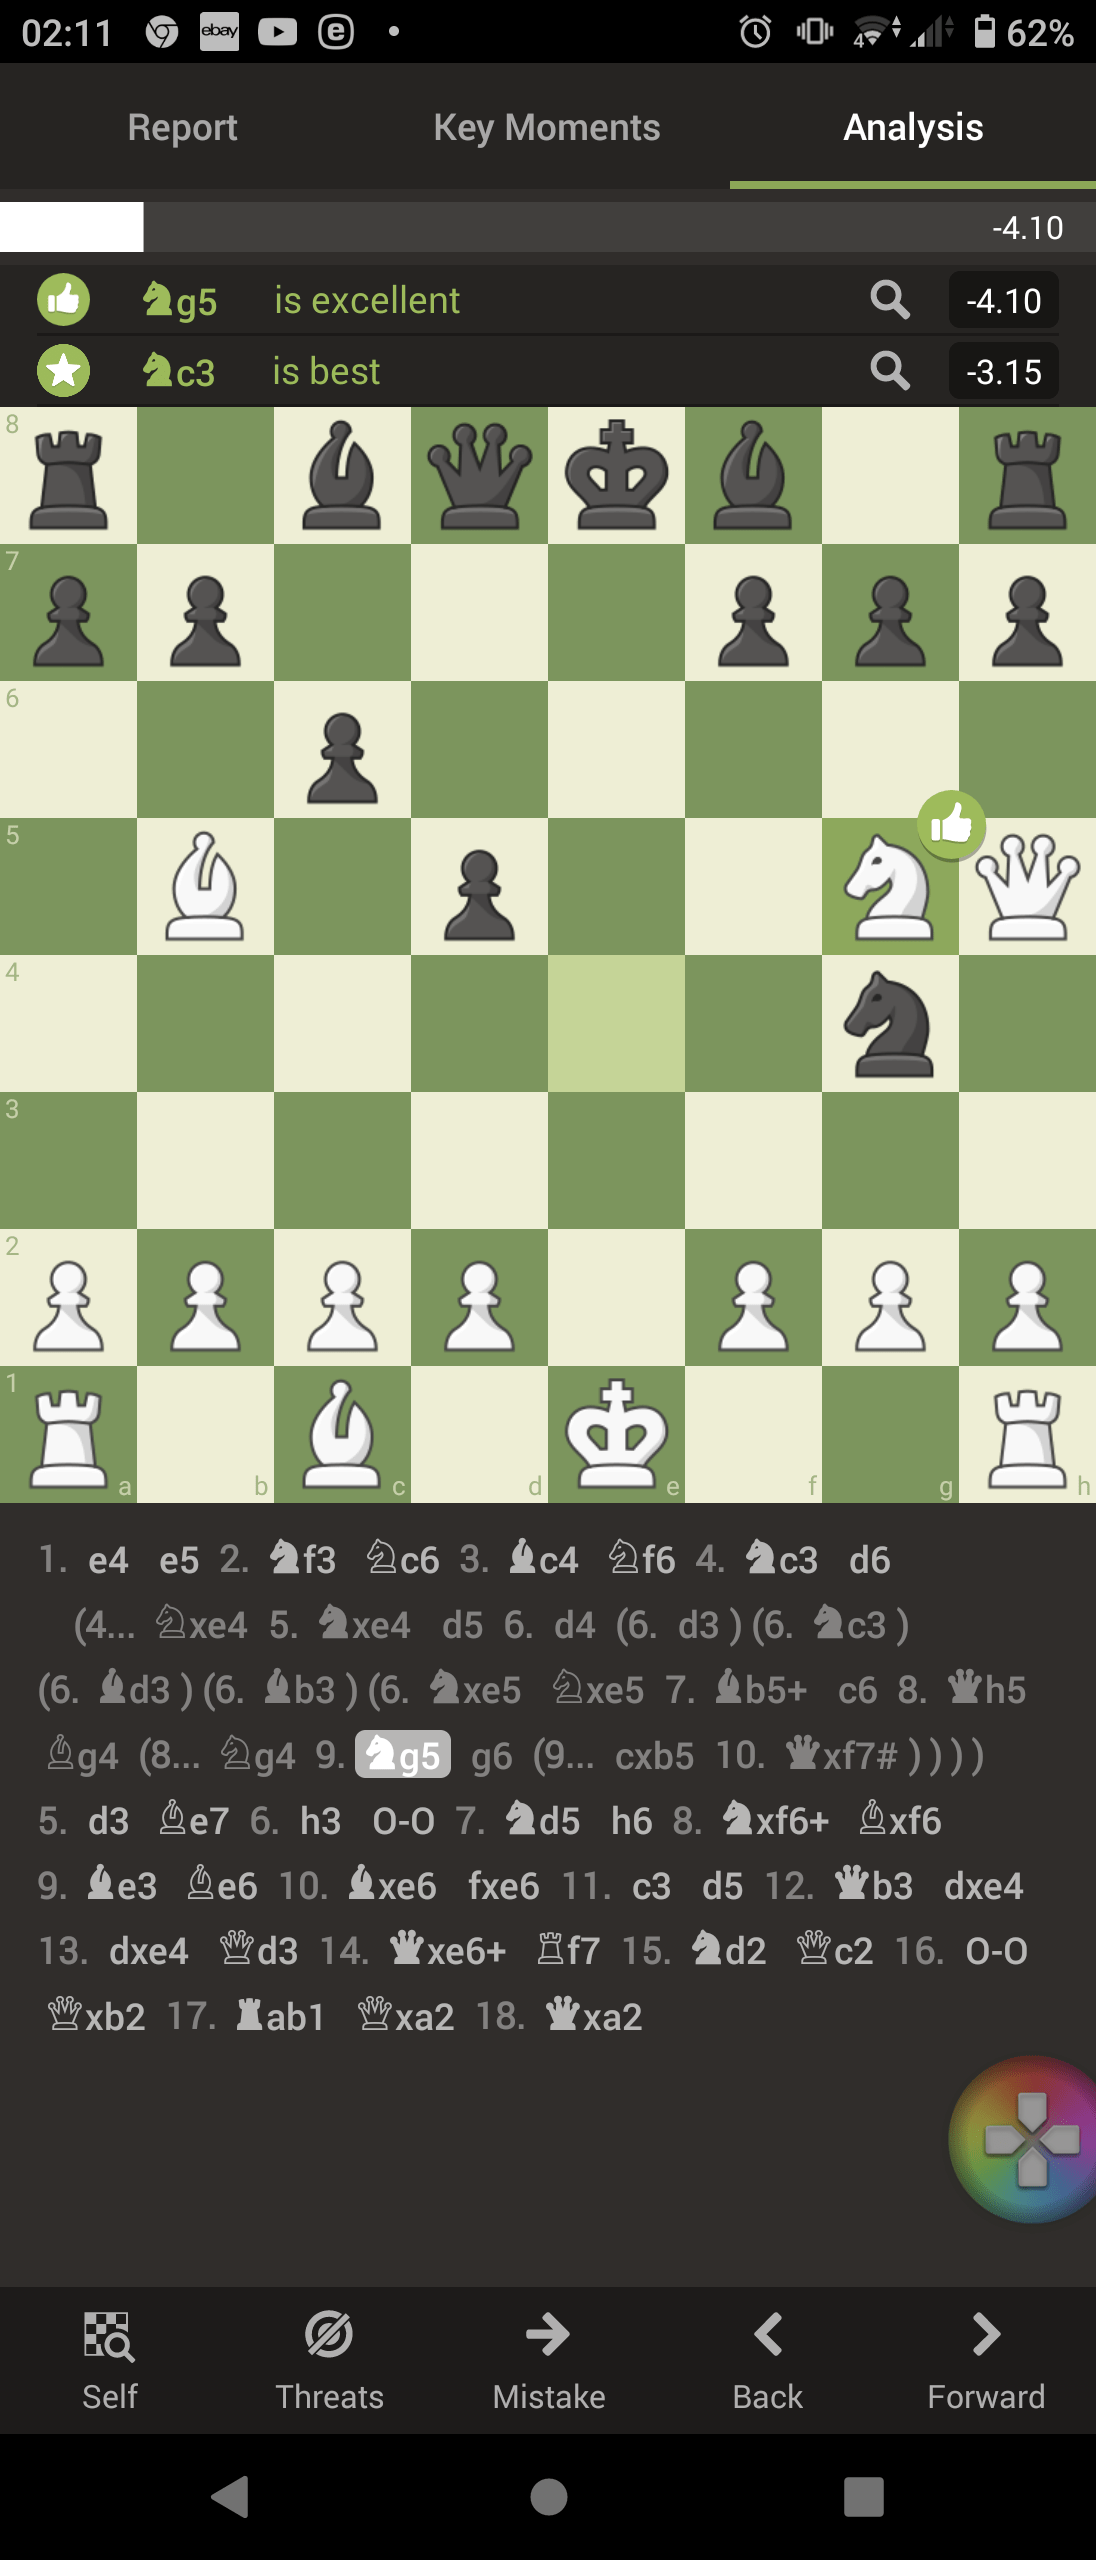 Analysis engine error? - Chess Forums 